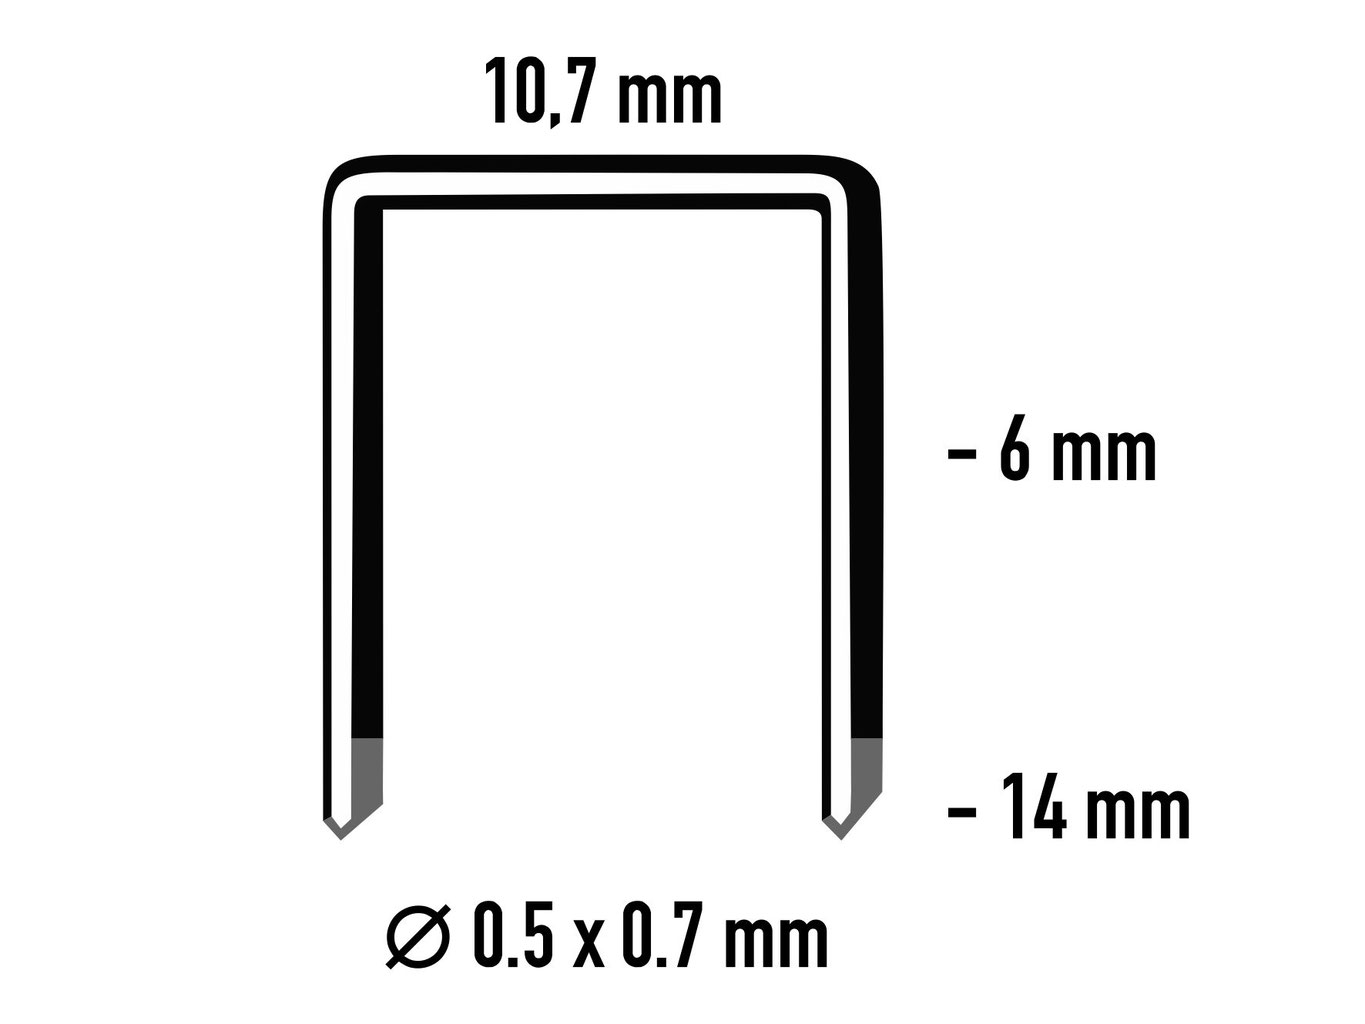 Prebena Heftklammer Type VX : 10 mm Abmessung